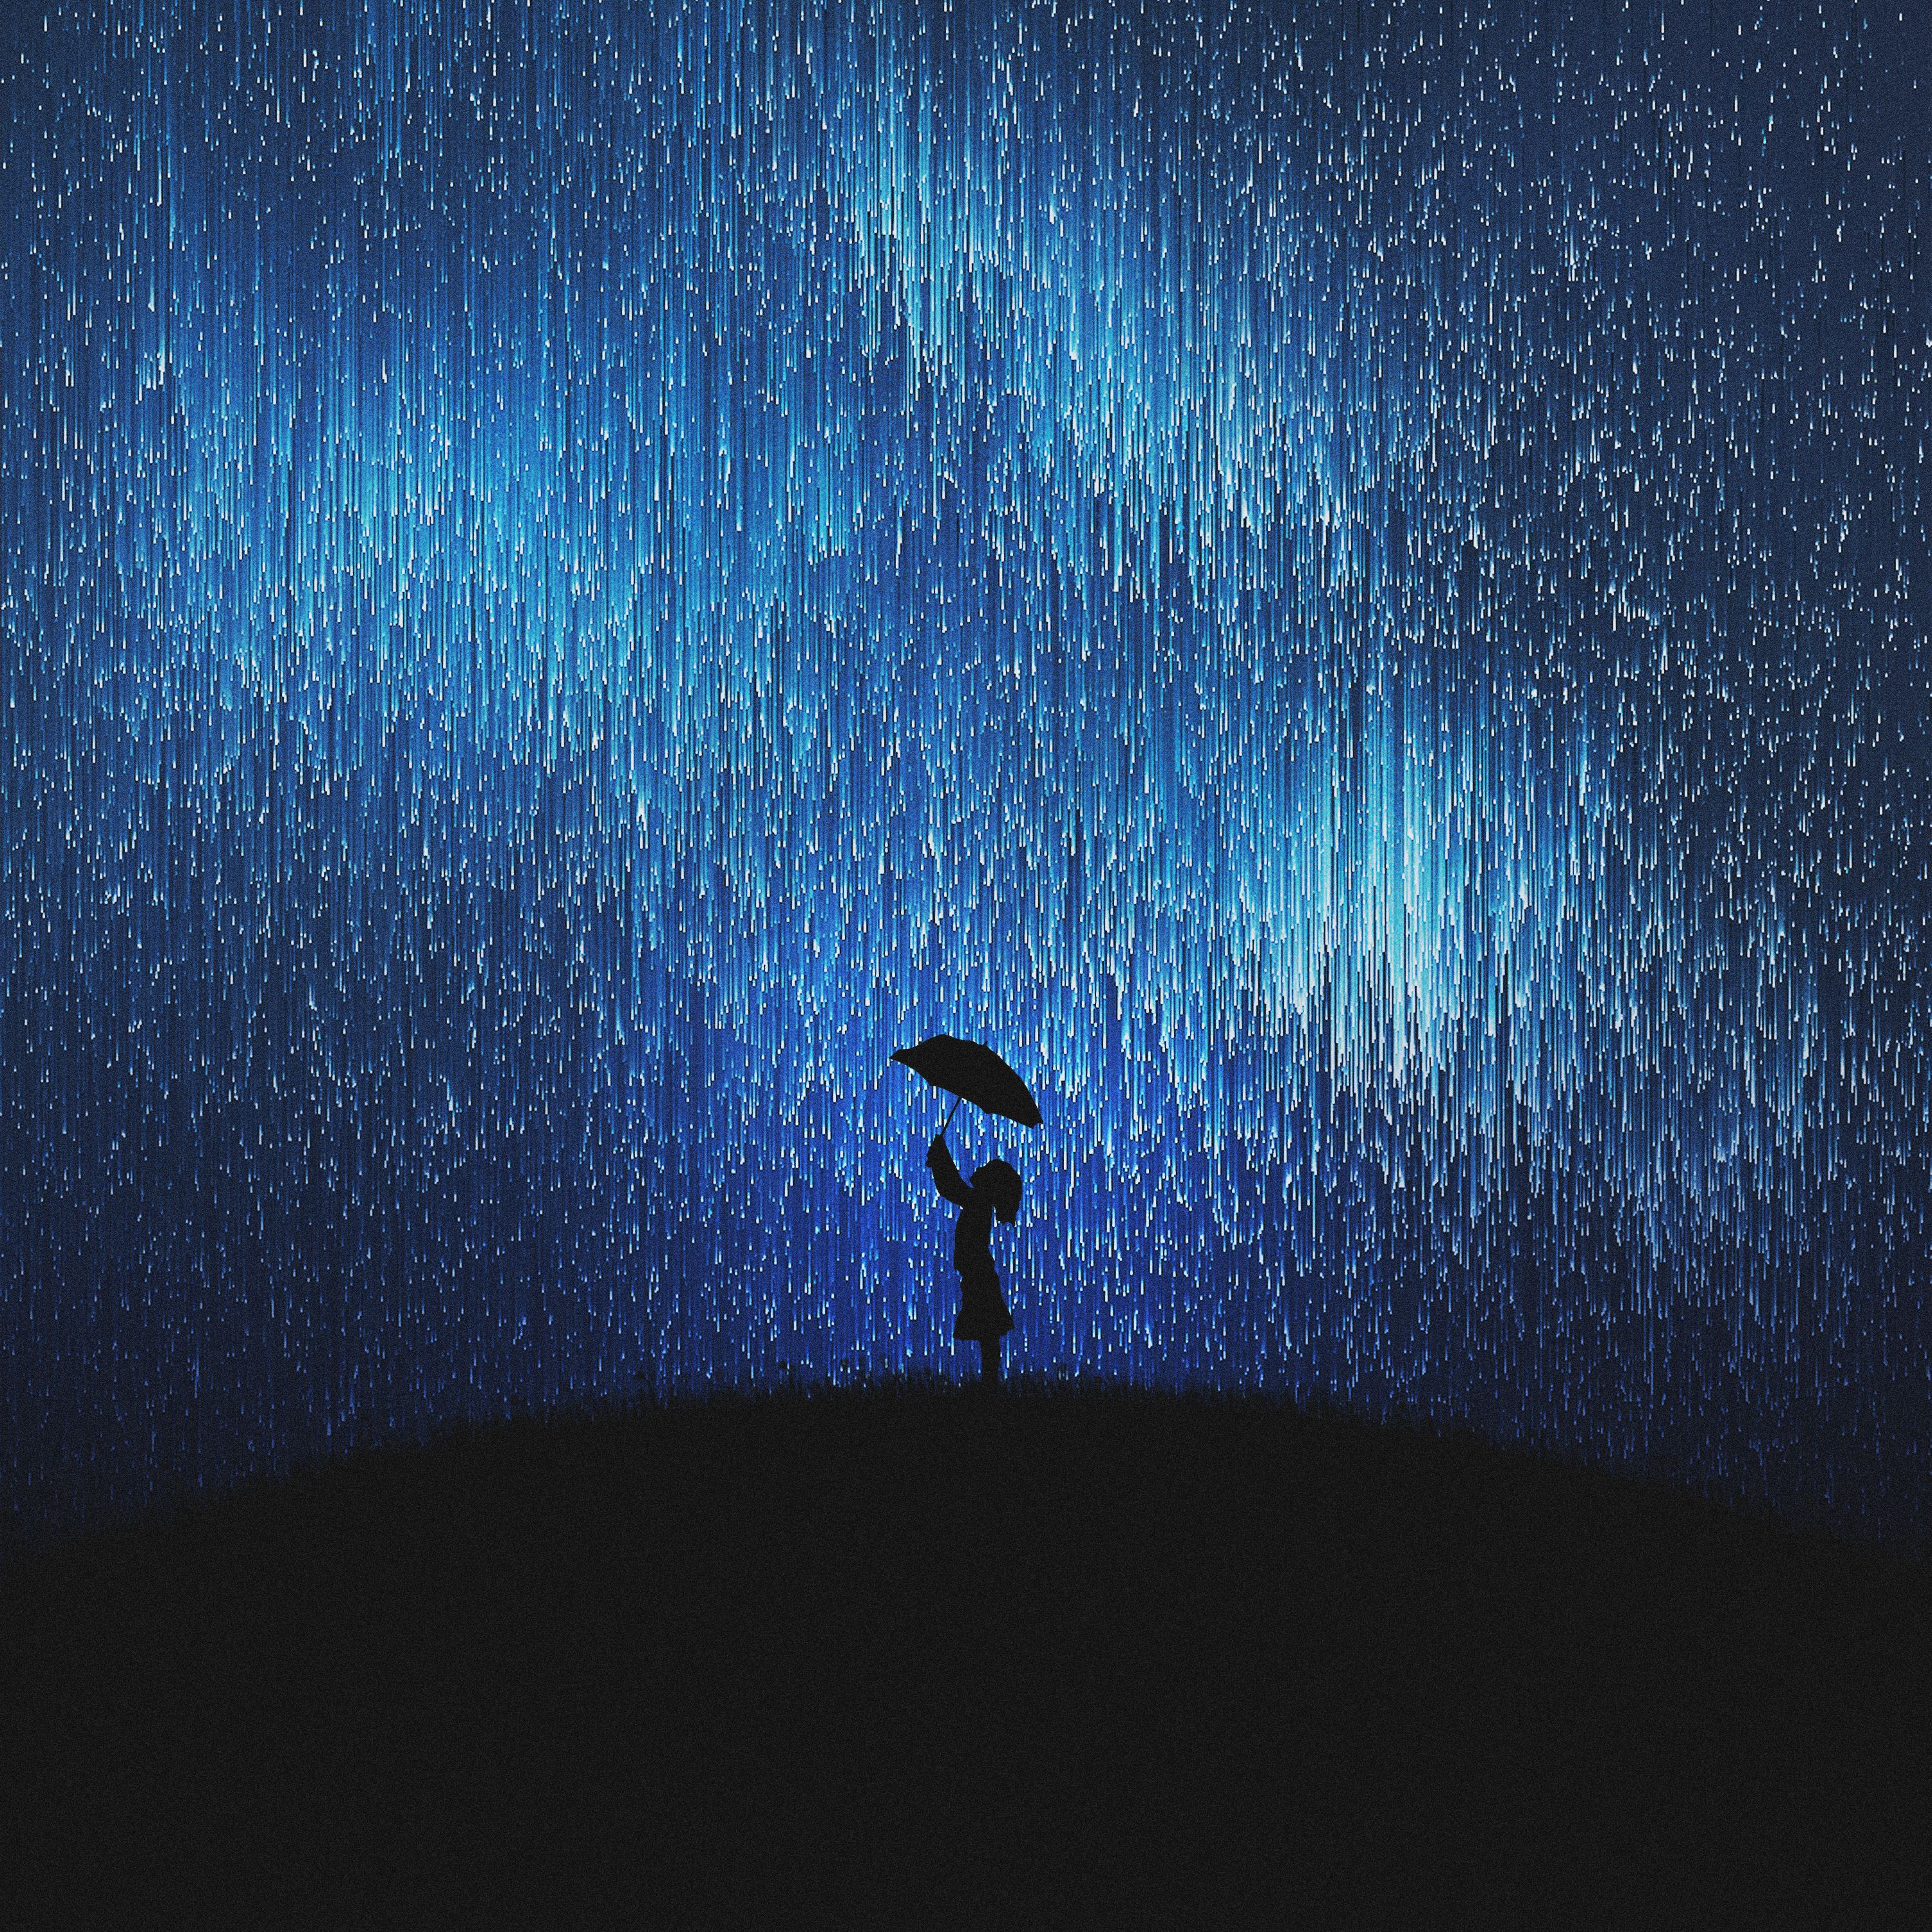 art, vector, rain, silhouette, umbrella High Definition image